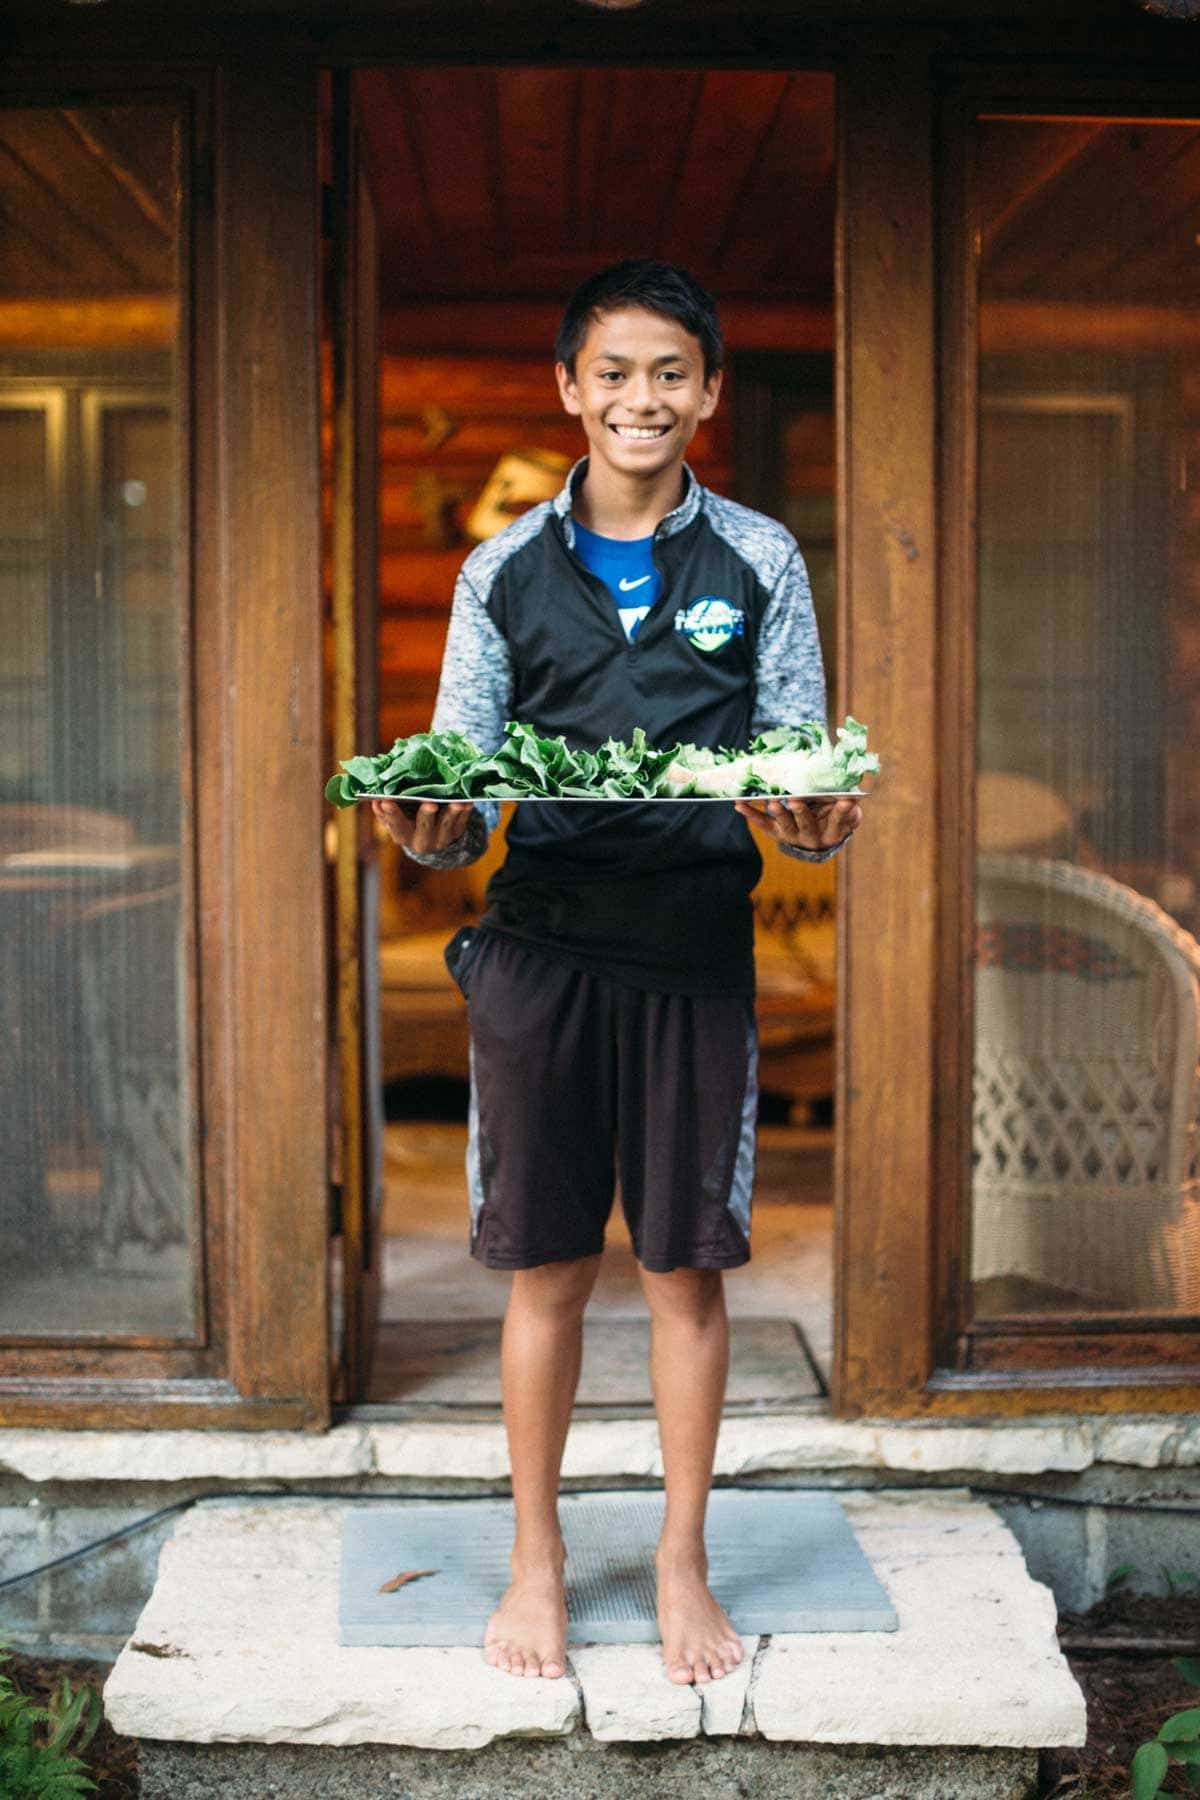 Boy holding a tray of lettuce.